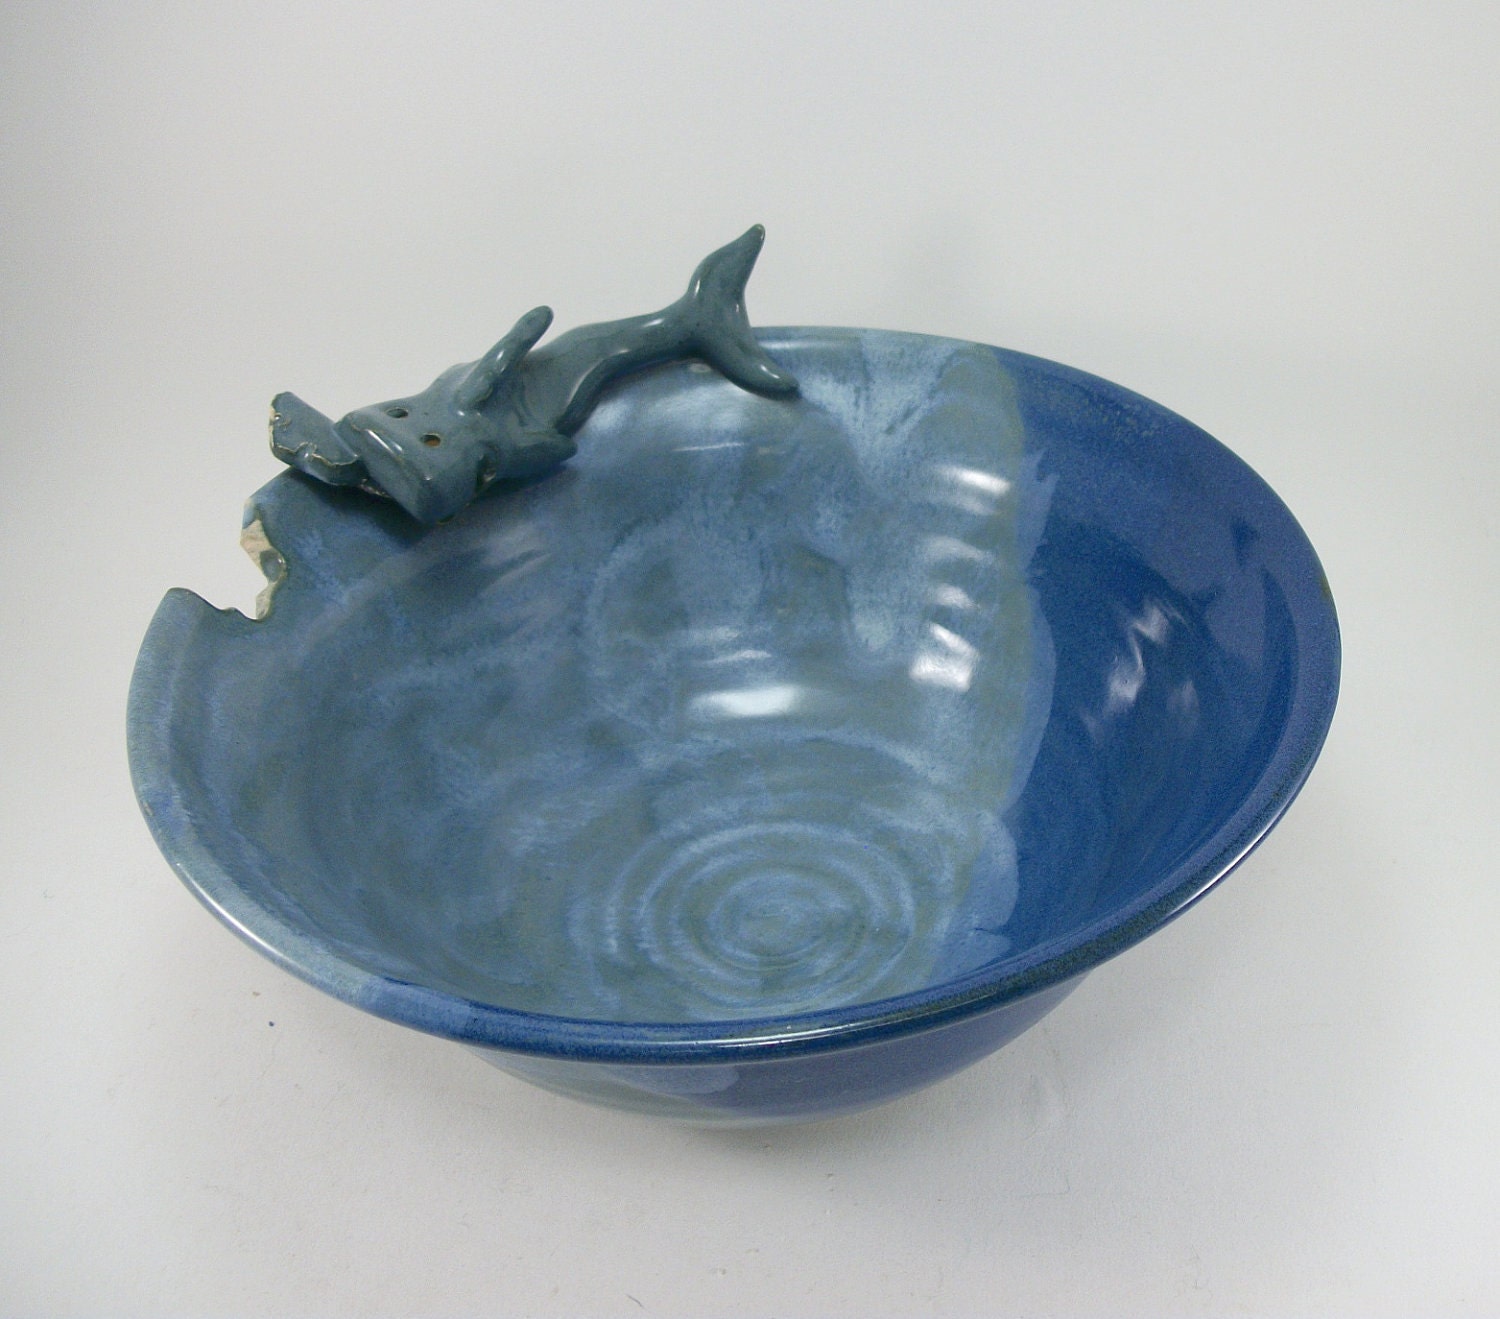 another shark bowl